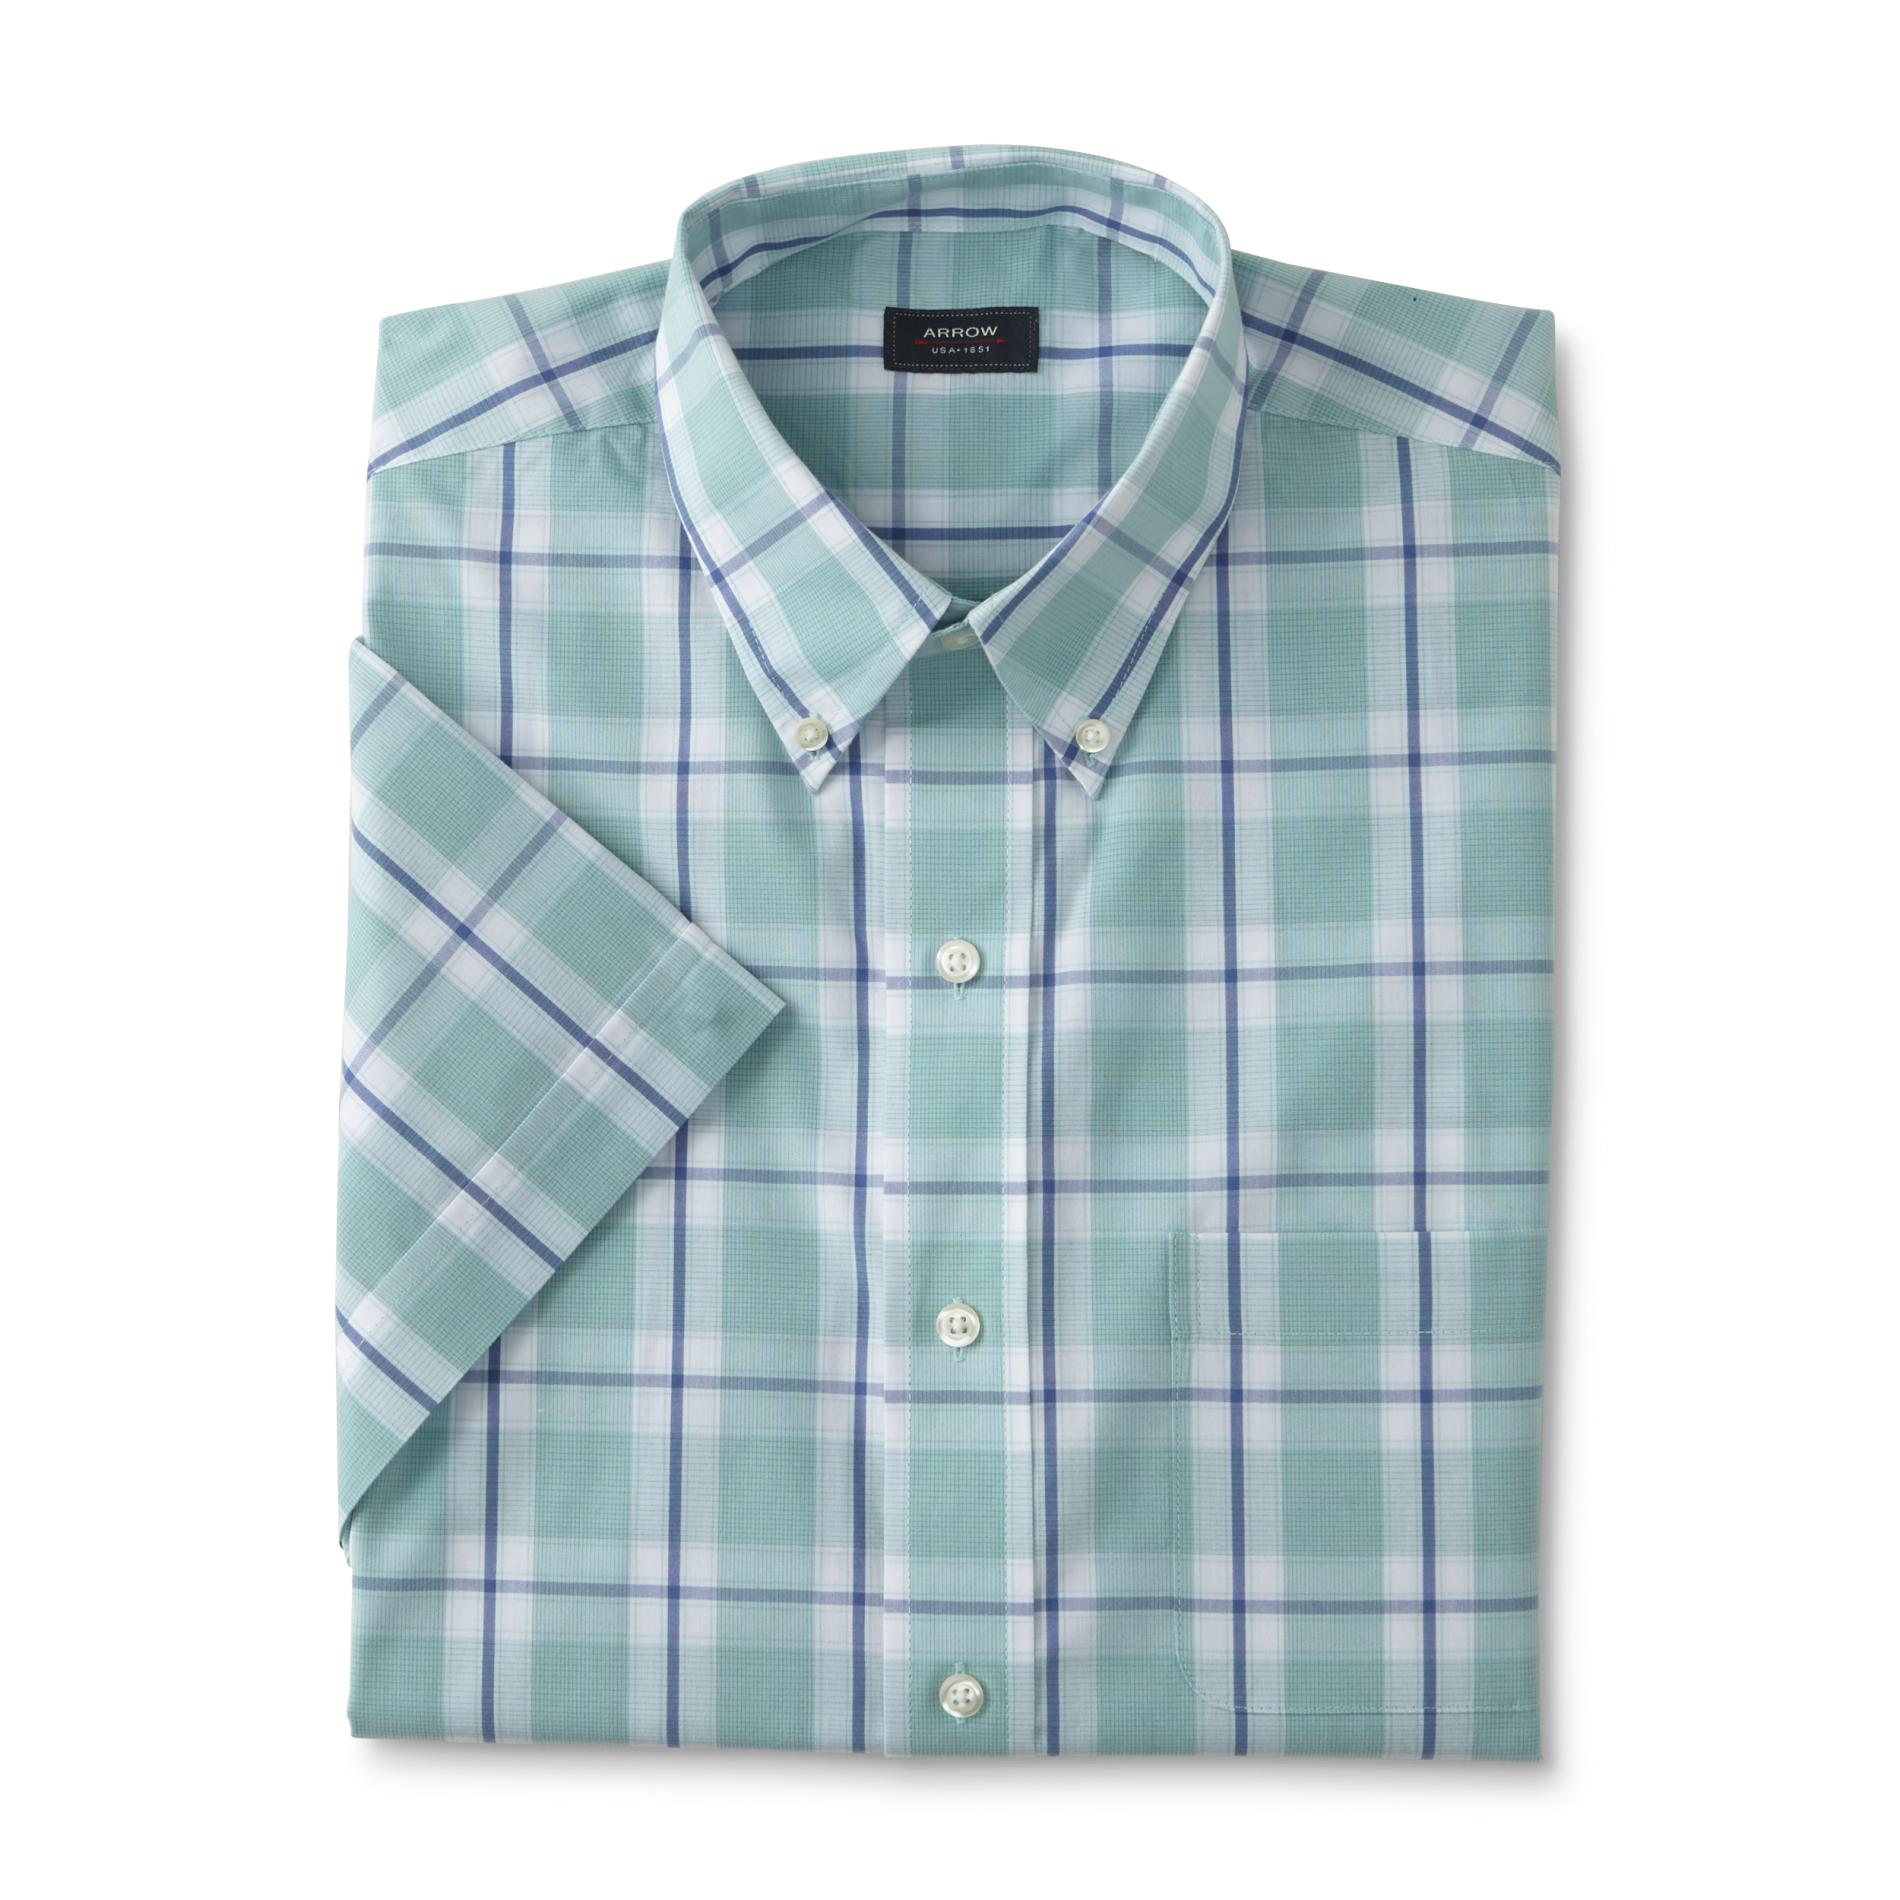 Men's Short-Sleeve Dress Shirt - Plaid